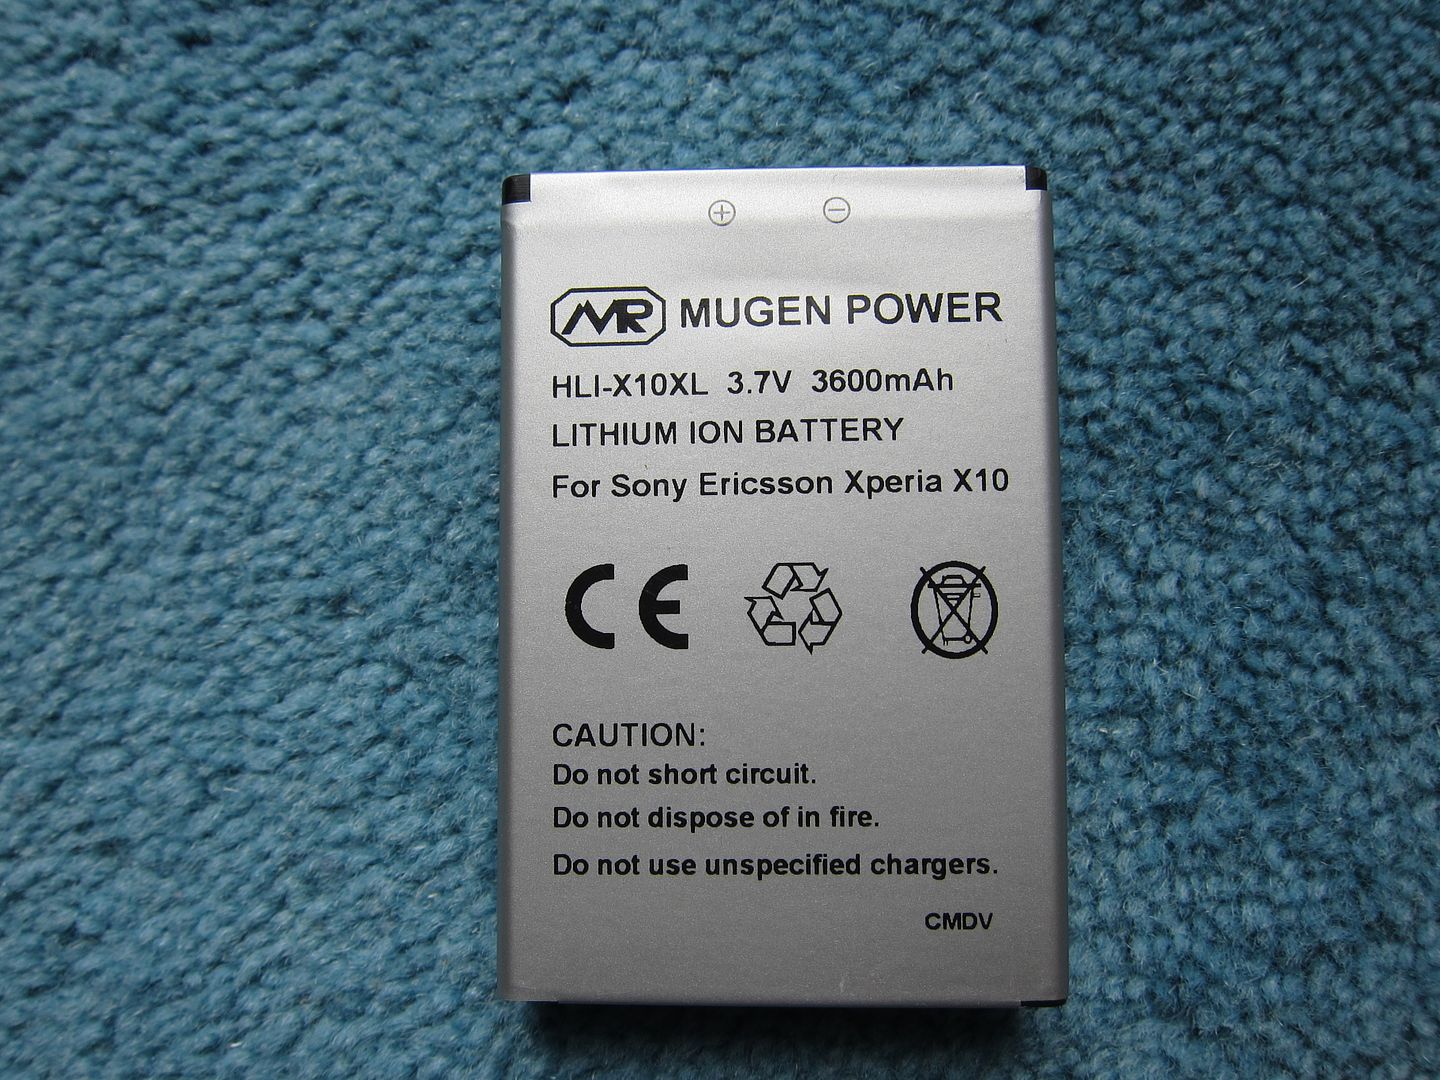 Mugen Power Xperia X10 3600mAh Battery